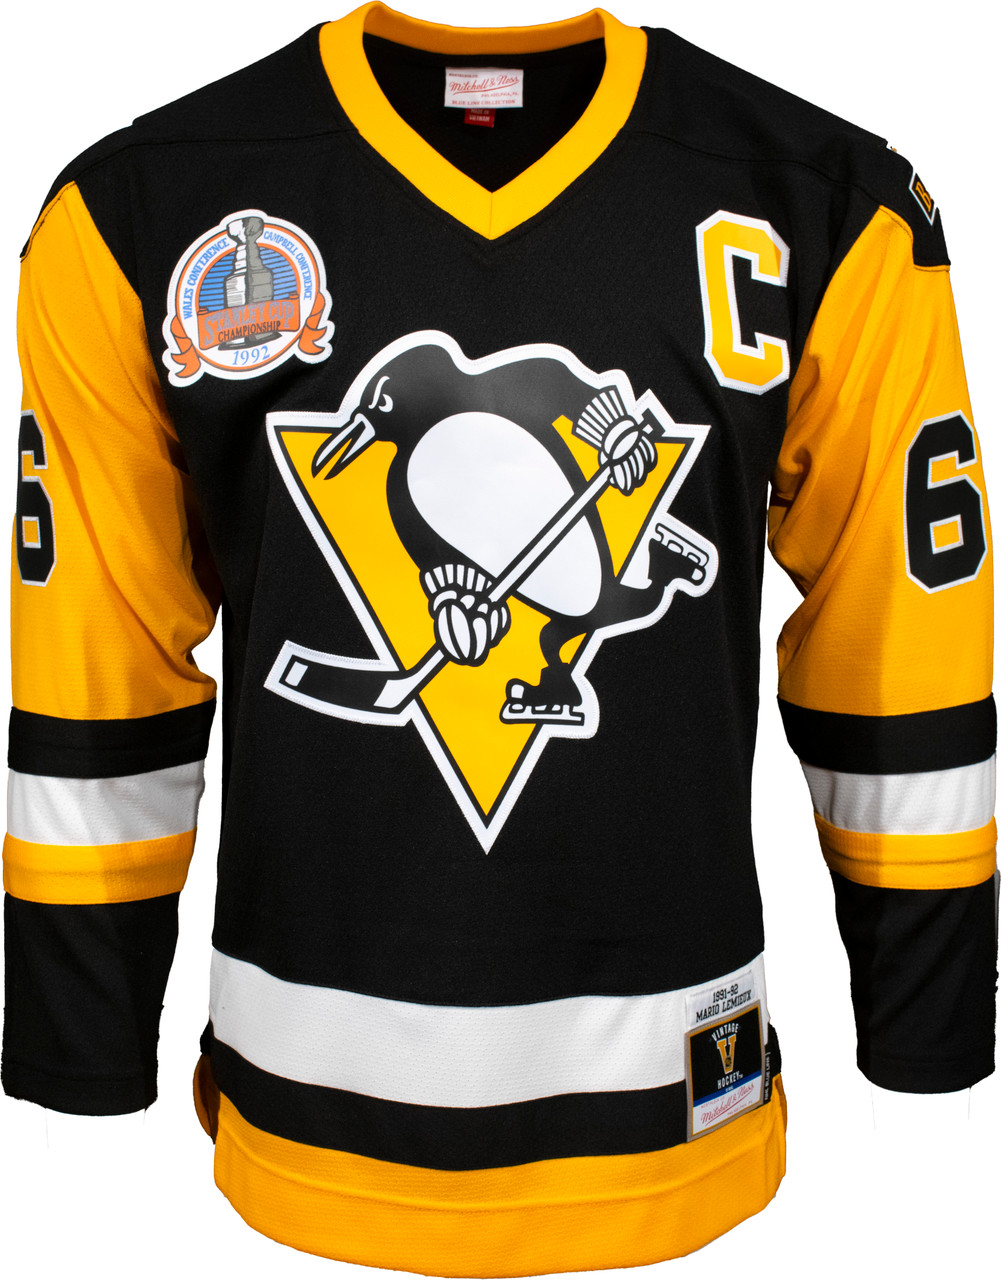 1991-92 Pittsburgh Penguins Jerseys